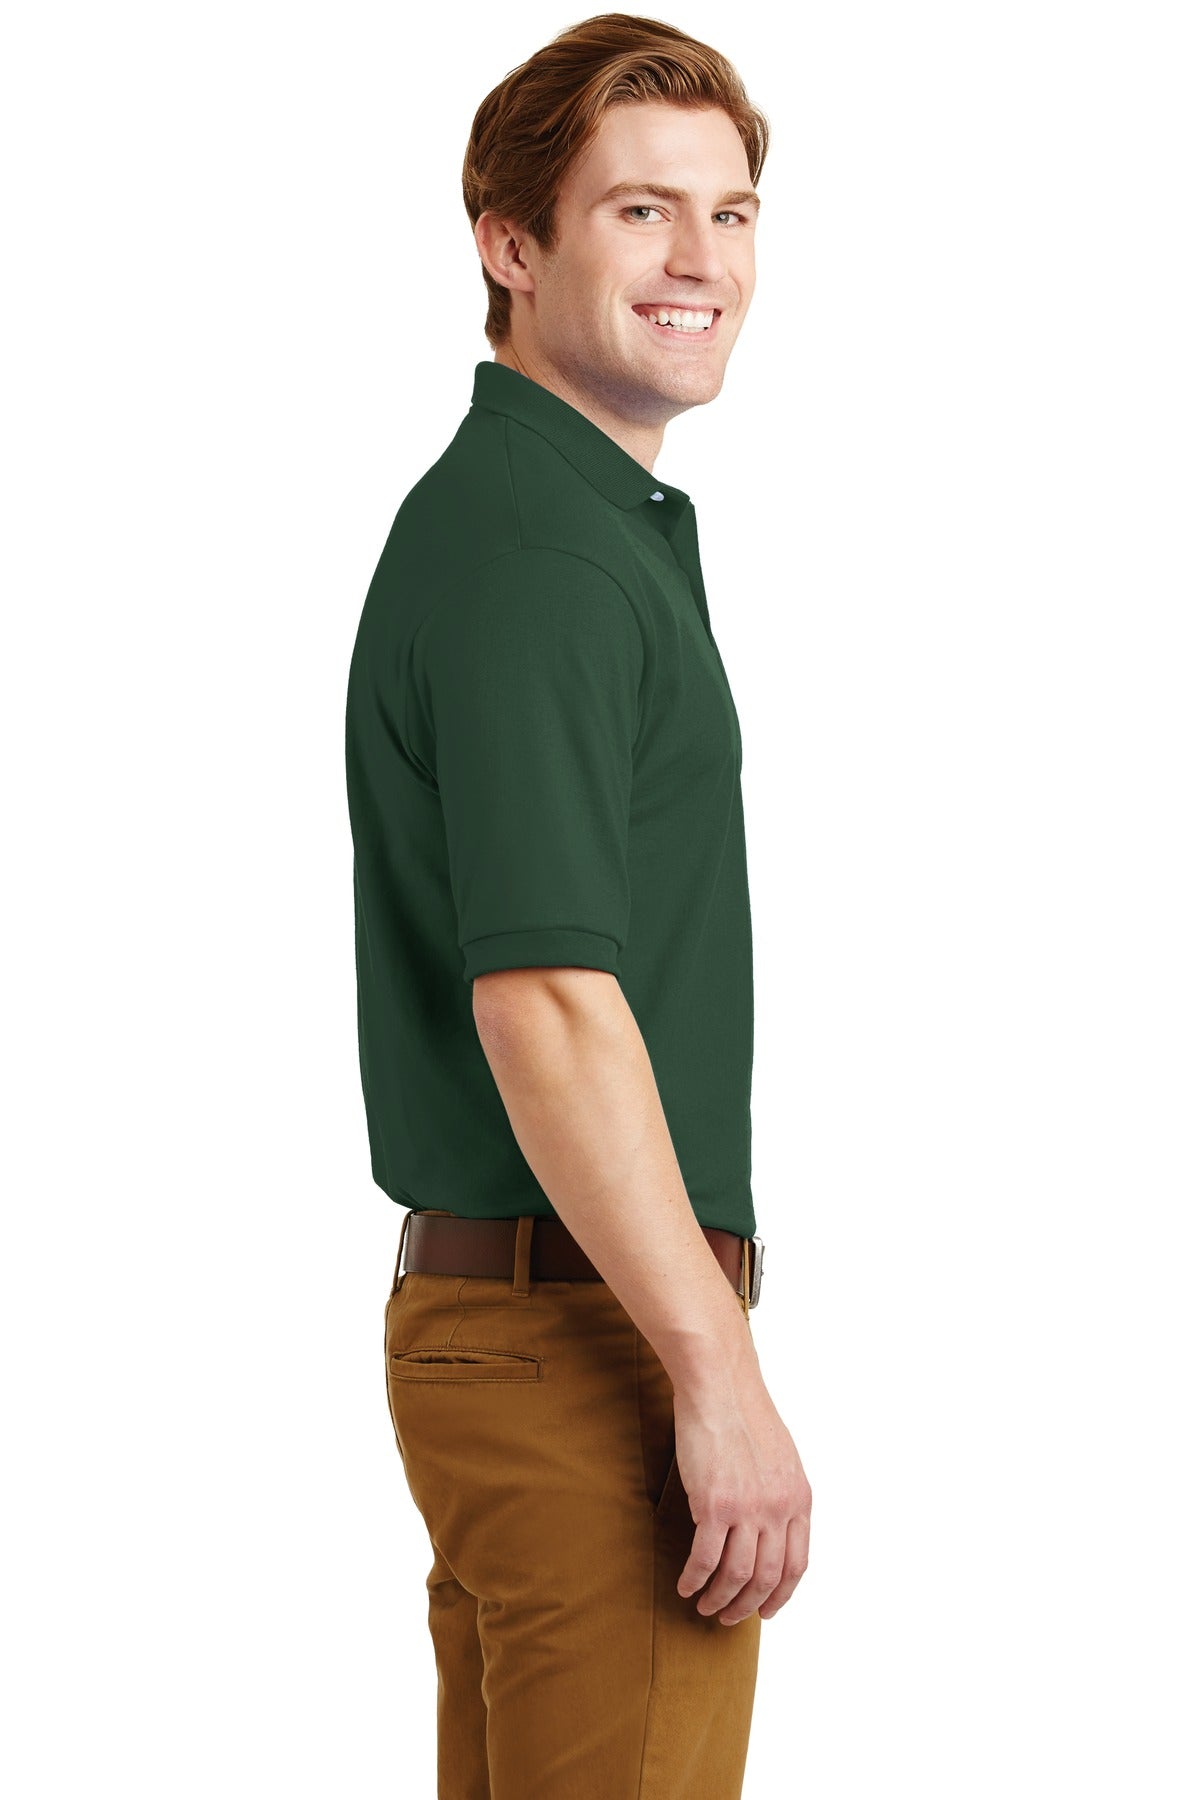 JERZEES® - SpotShield™ 5.4-Ounce Jersey Knit Sport Shirt. 437M [Forest] - DFW Impression